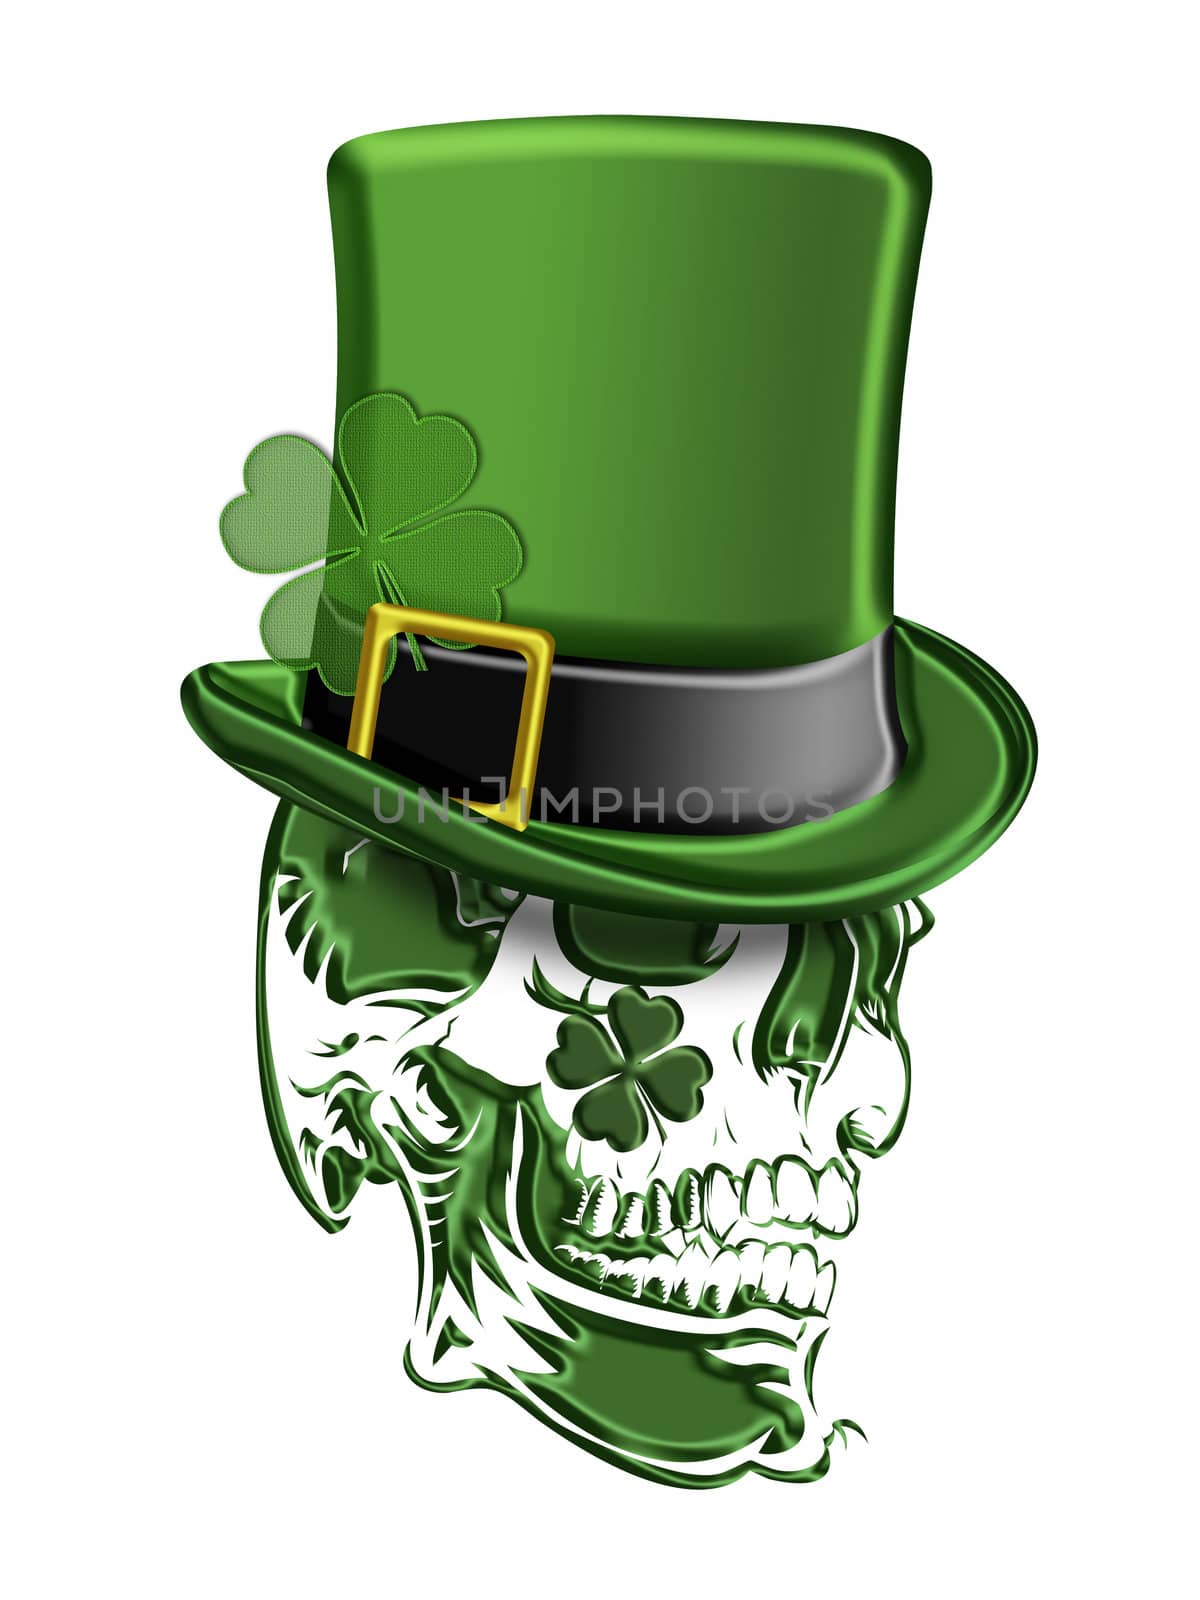 St Patricks Day Green Skull with Leprechaun Hat with Shamrocks Isolated on White Background Illustration